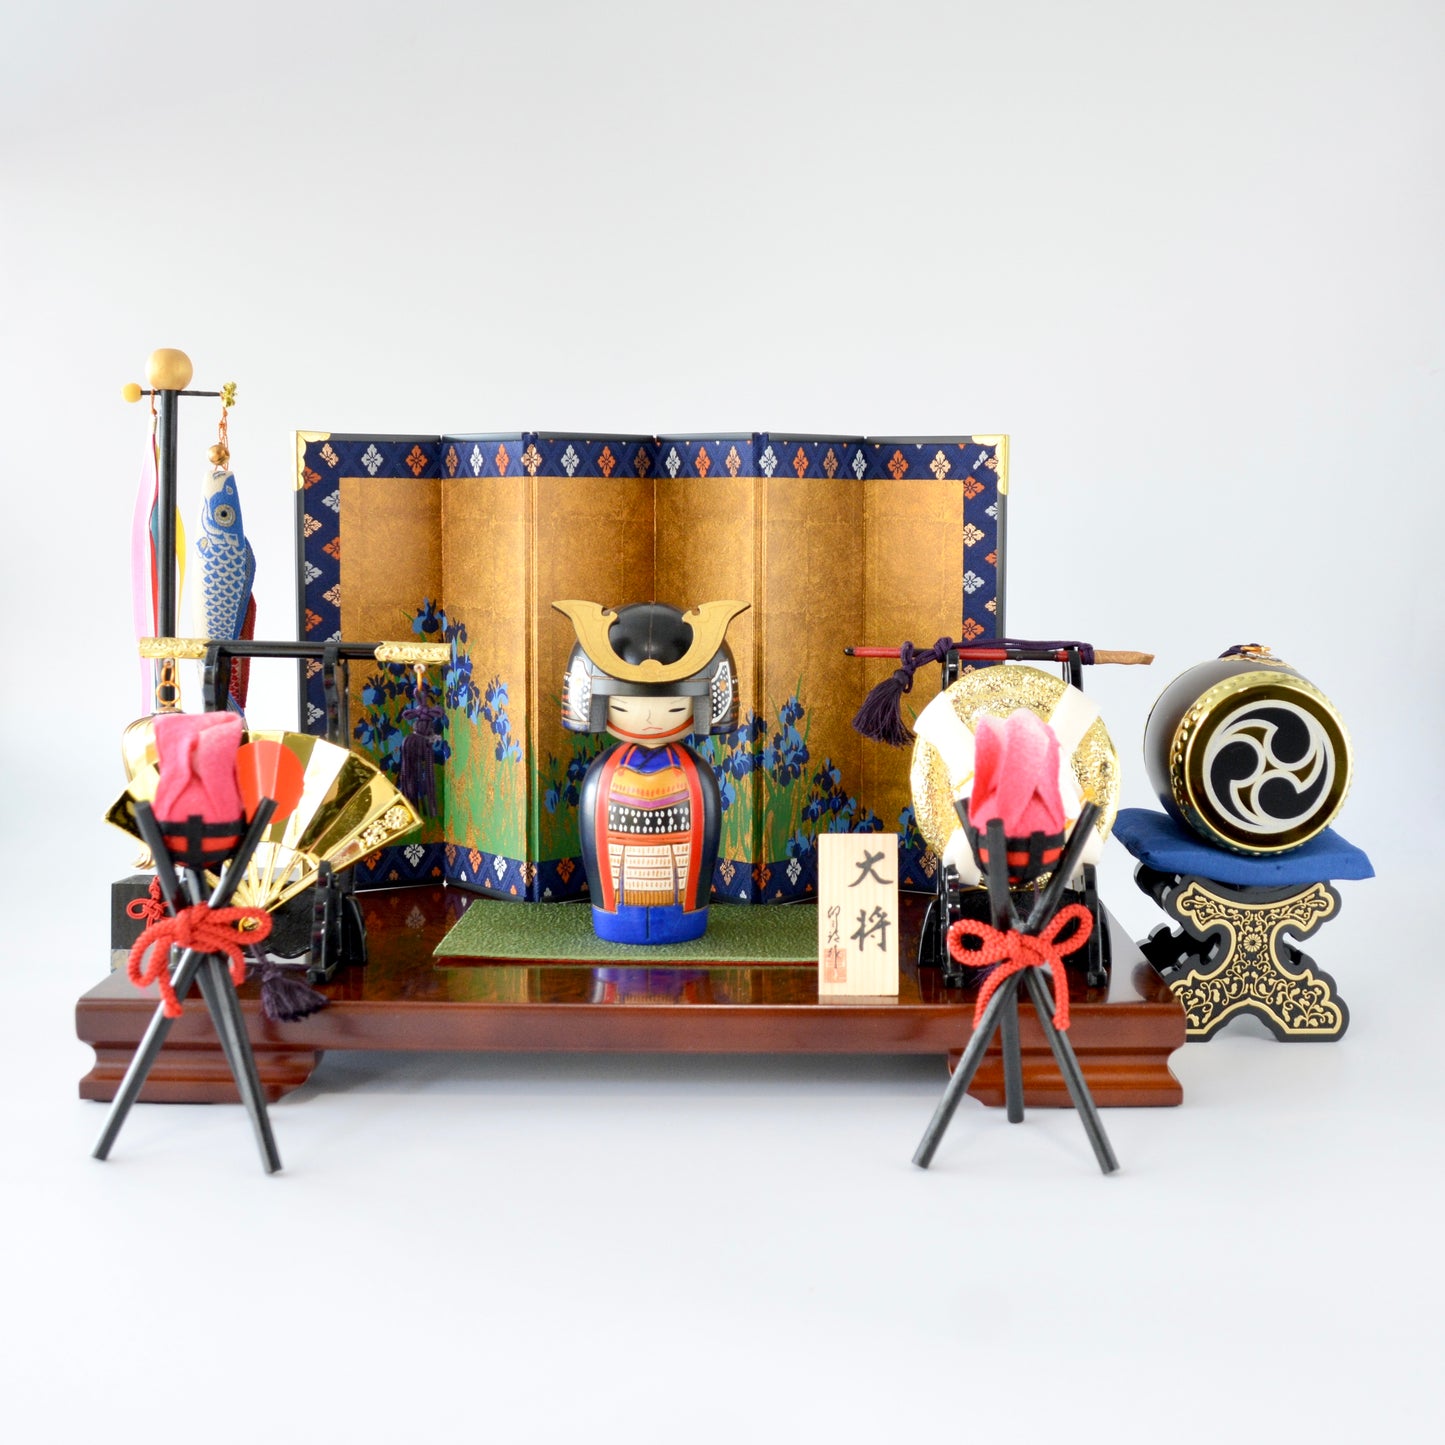 Taishō (Samurai general) / Complete set